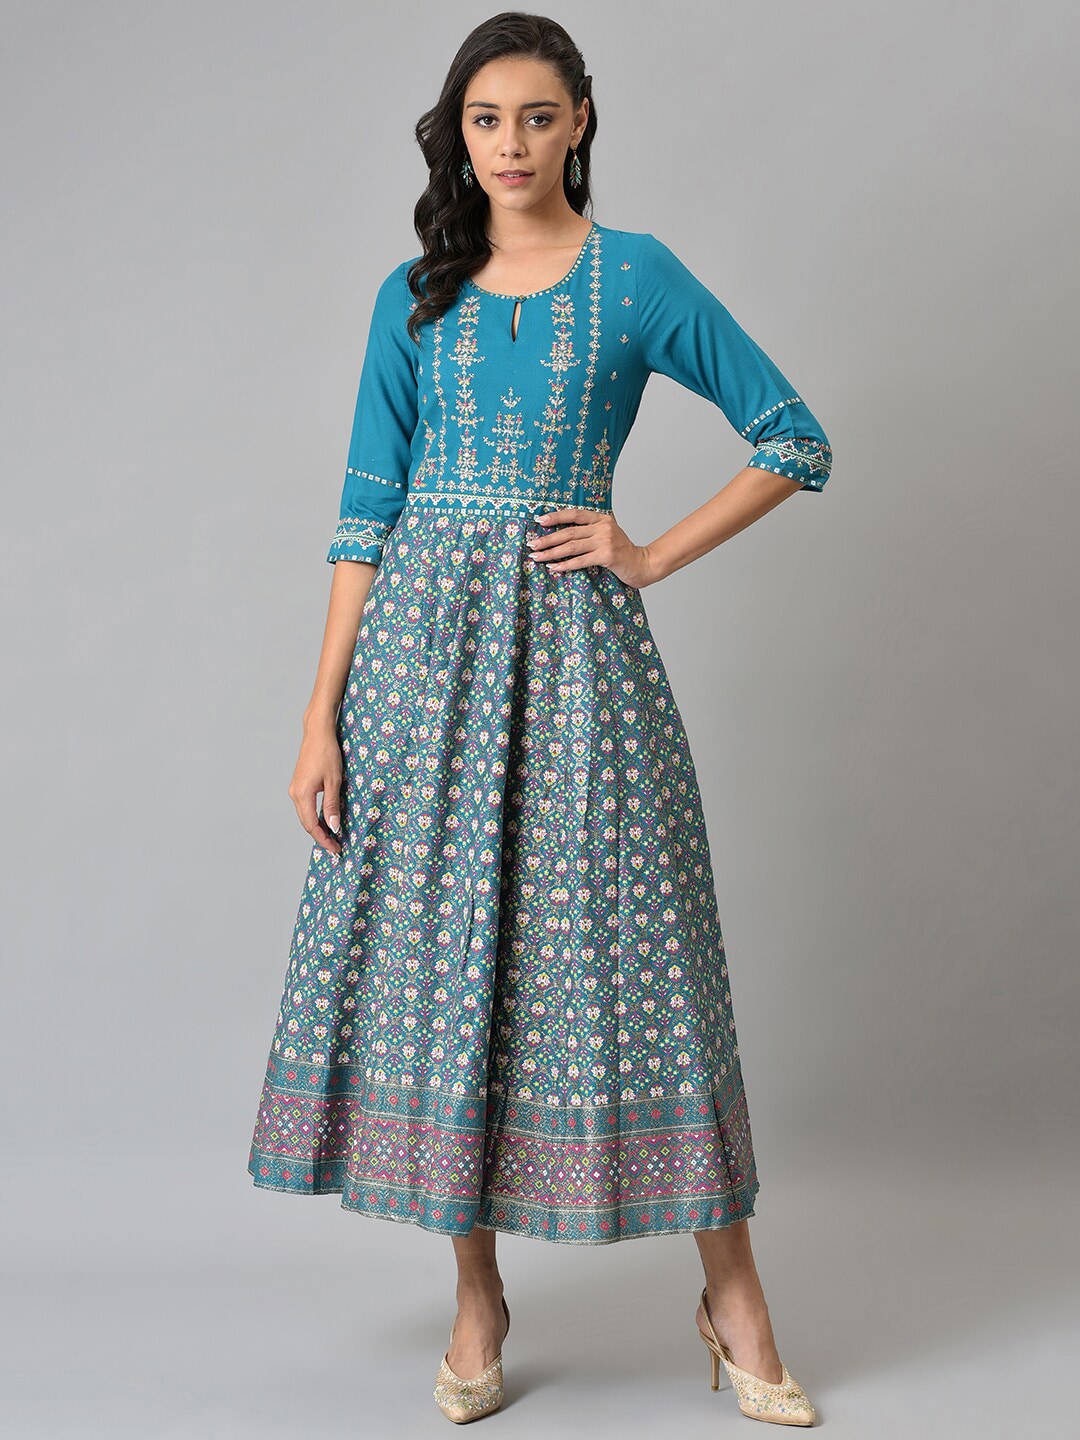 W Teal Ethnic Motifs Chiffon Ethnic Maxi Dress Price in India